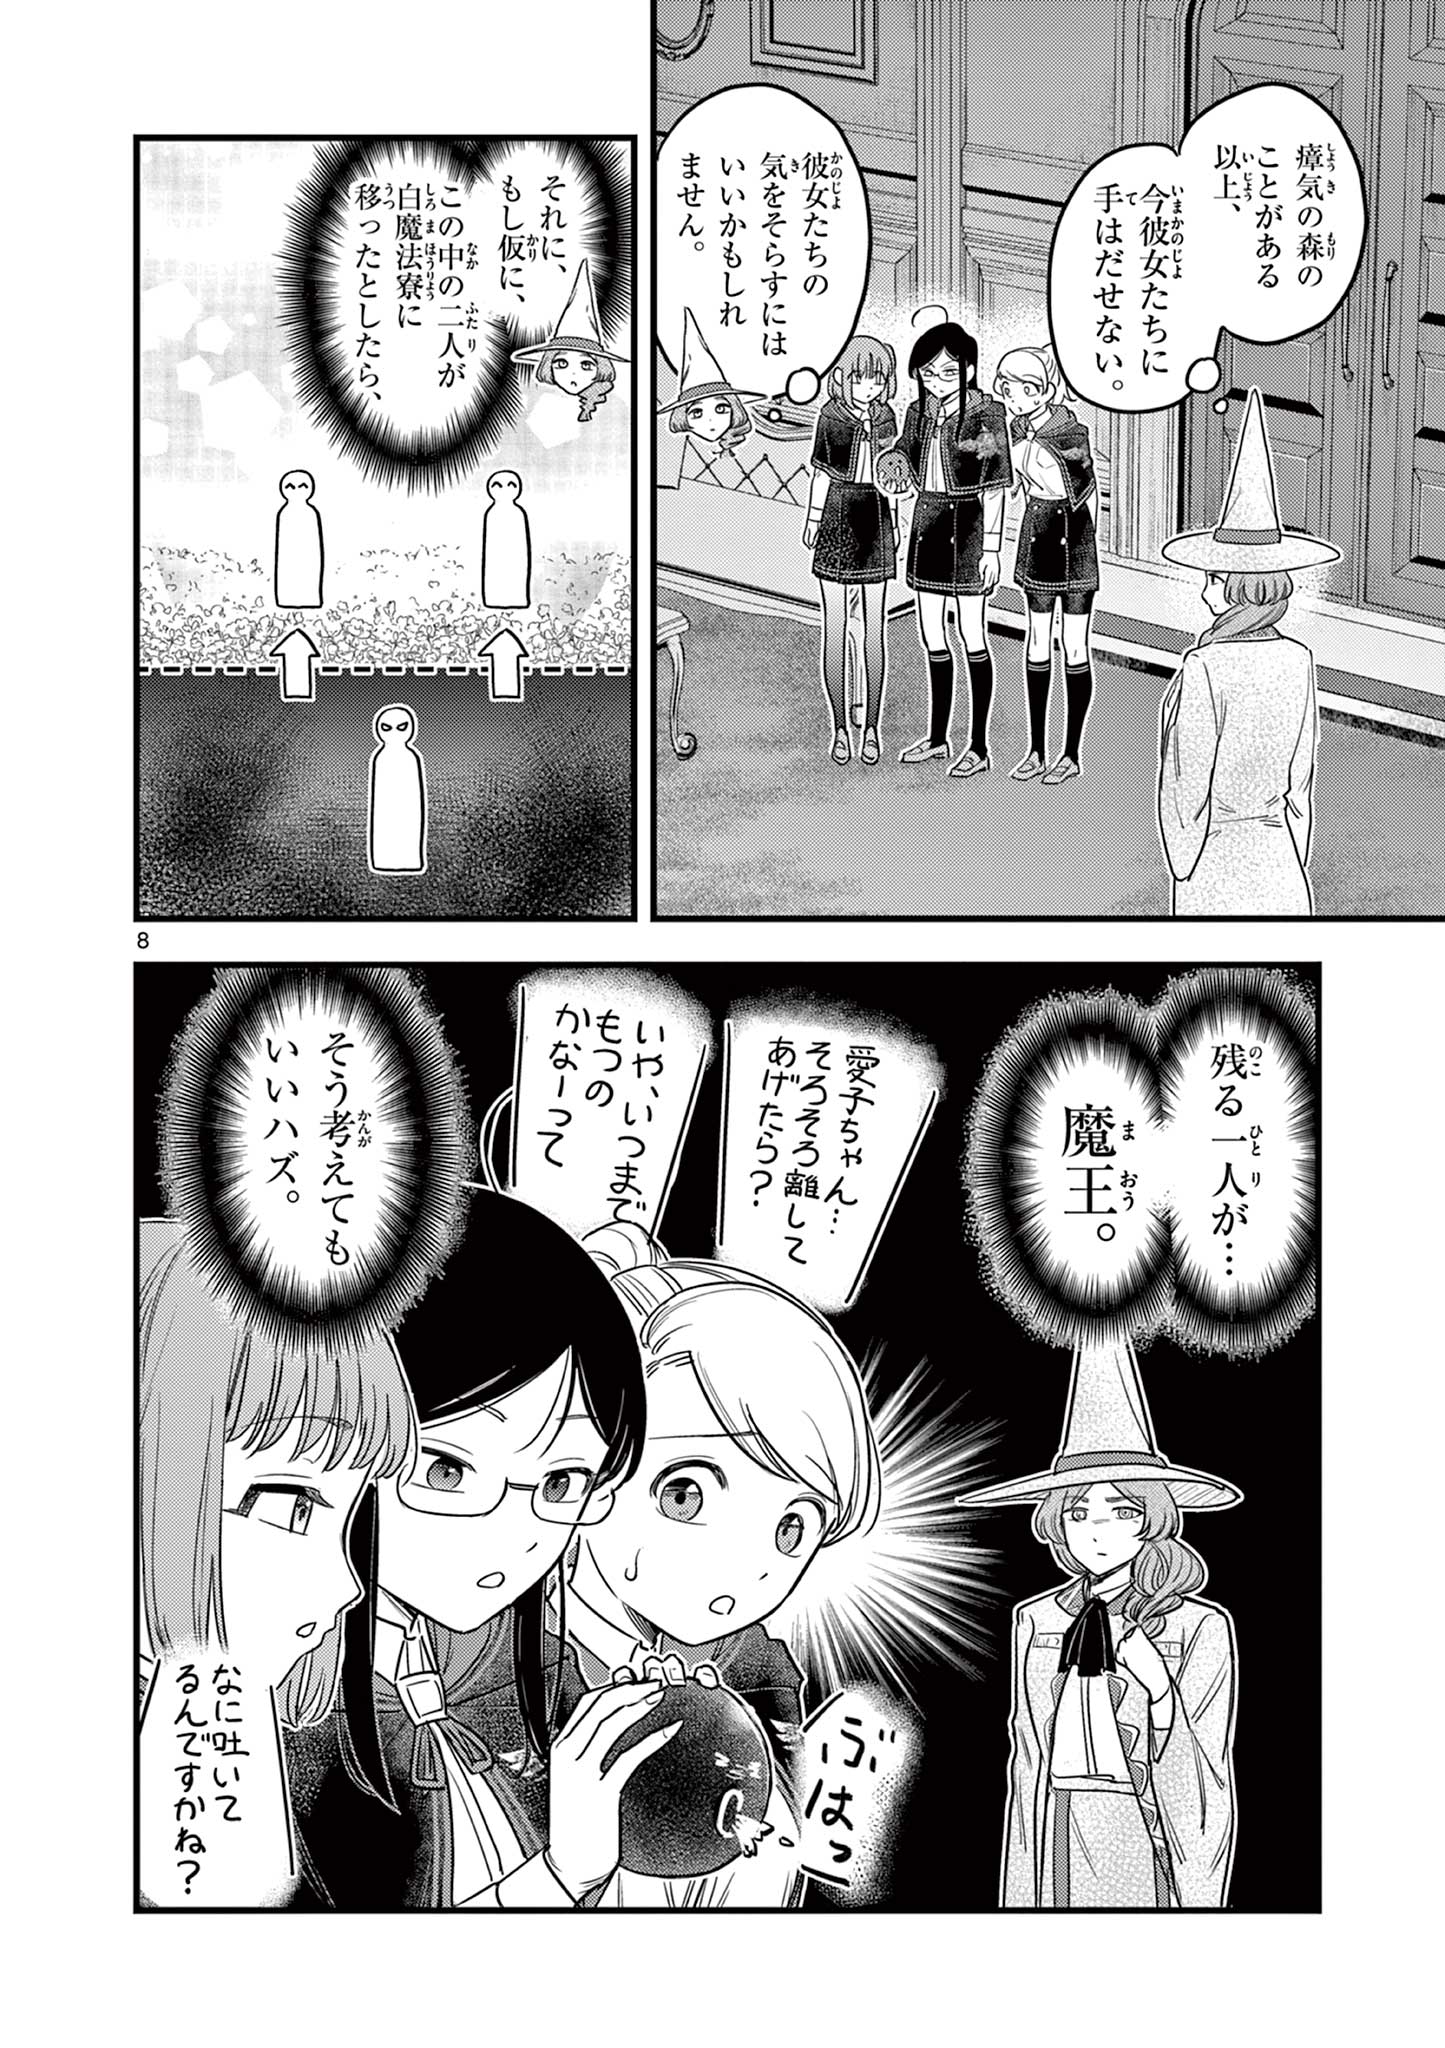 Kuro Mahou Ryou no Sanakunin - Chapter 10 - Page 8